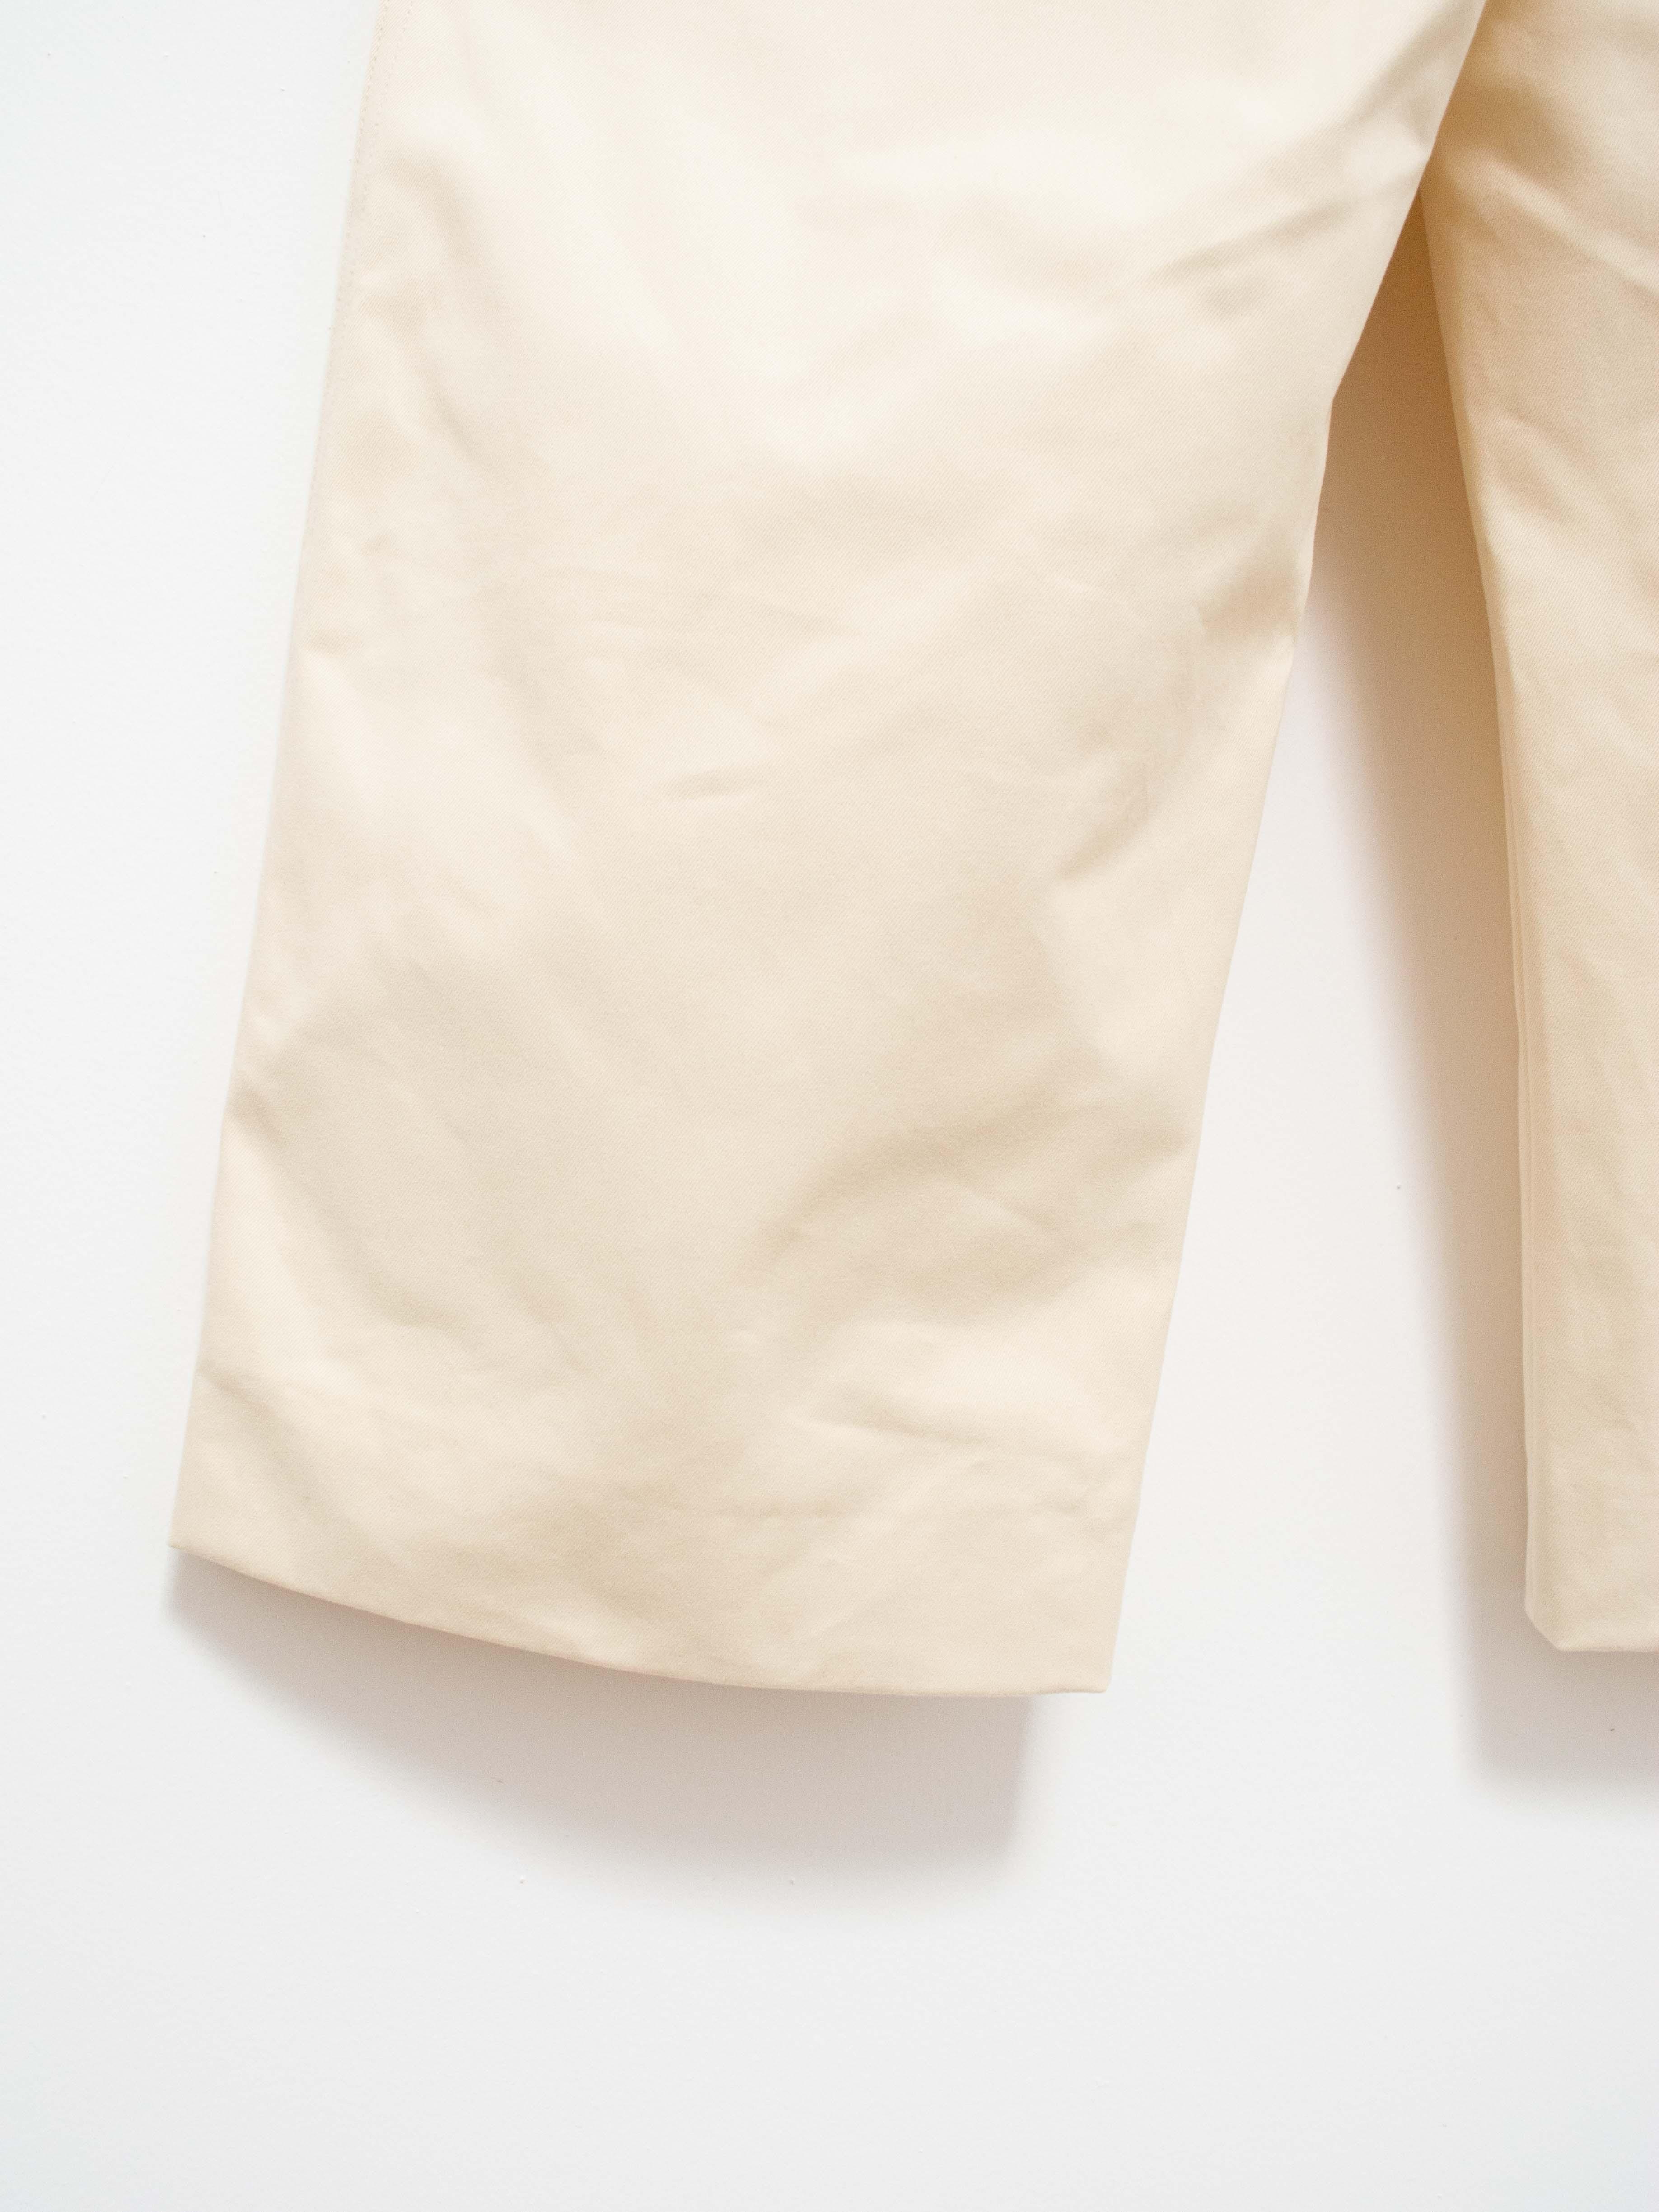 Namu Shop - Studio Nicholson Asher Peached Cotton Twill Pants - Cream